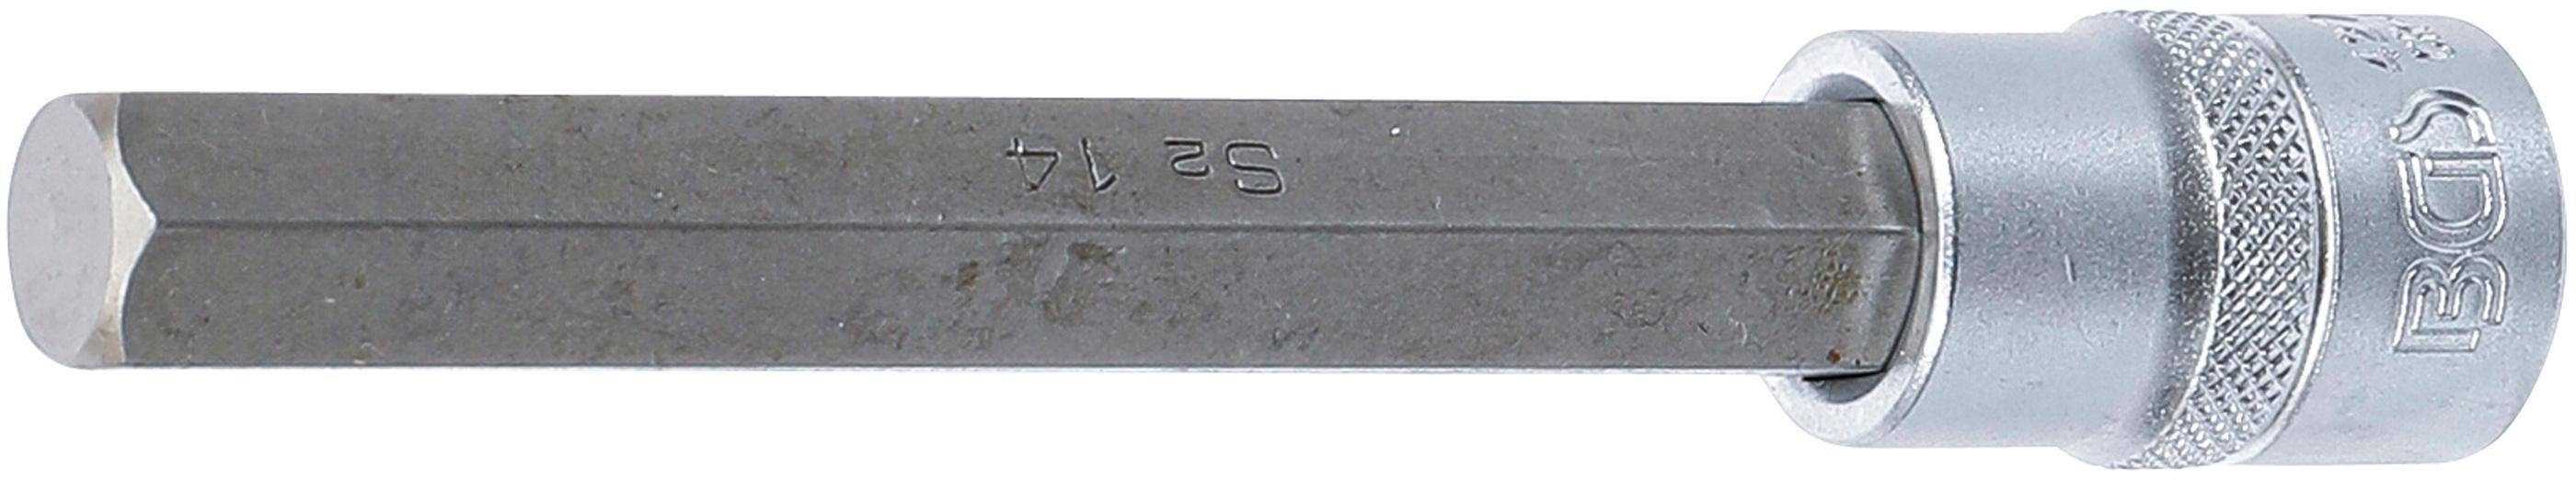 BGS technic Sechskant-Bit Bit-Einsatz, Länge 140 mm, Antrieb Innenvierkant 12,5 mm (1/2), Innensechskant 14 mm